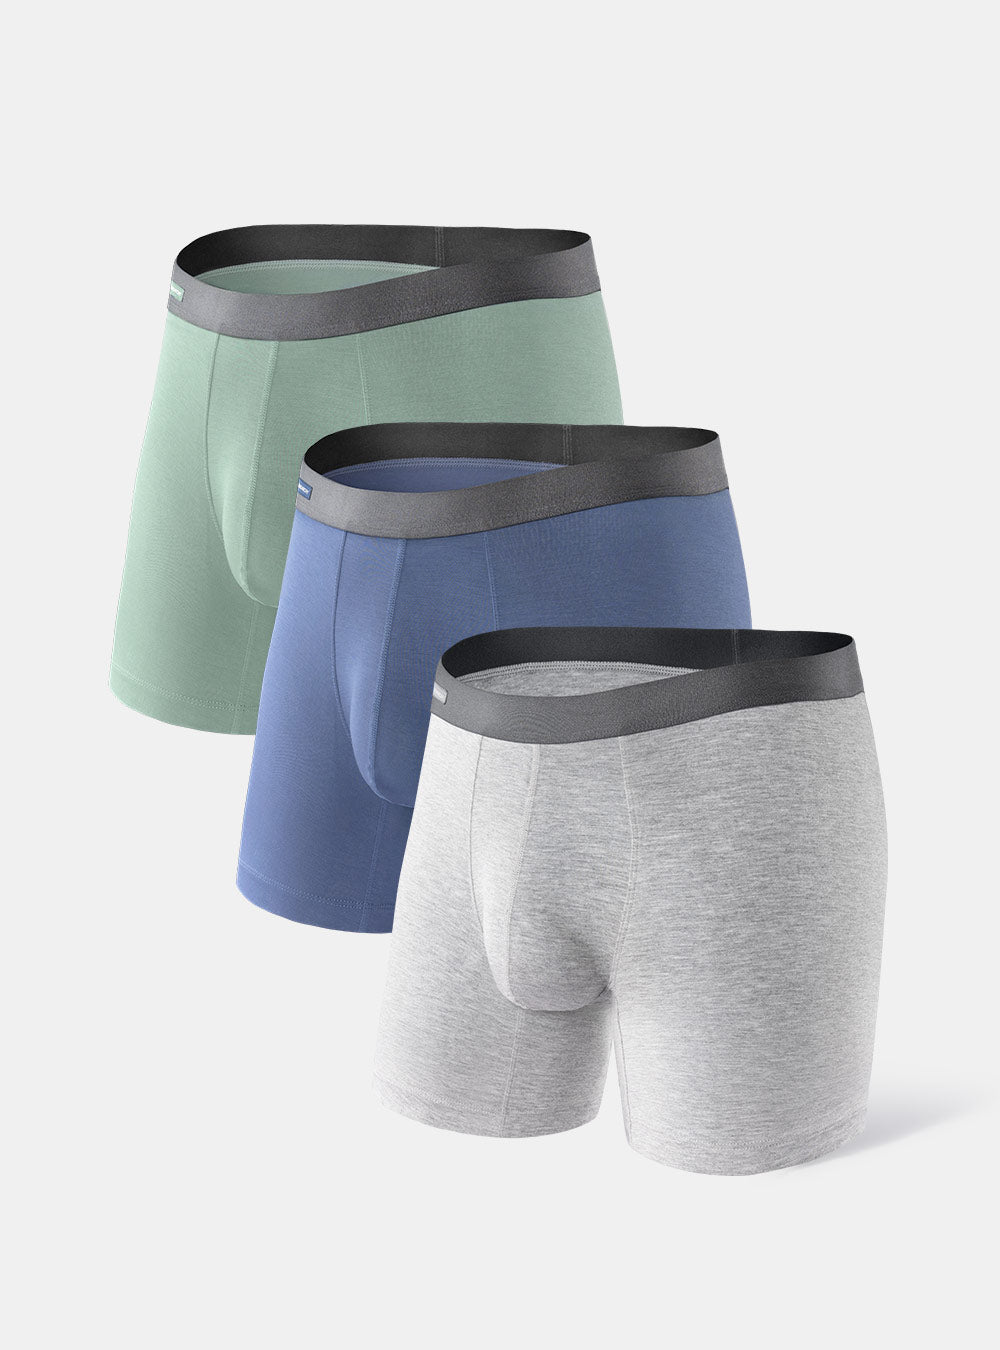 David Archy 3 Packs Leg Boxer Briefs Bamboo Rayon Ultra Soft Comfy